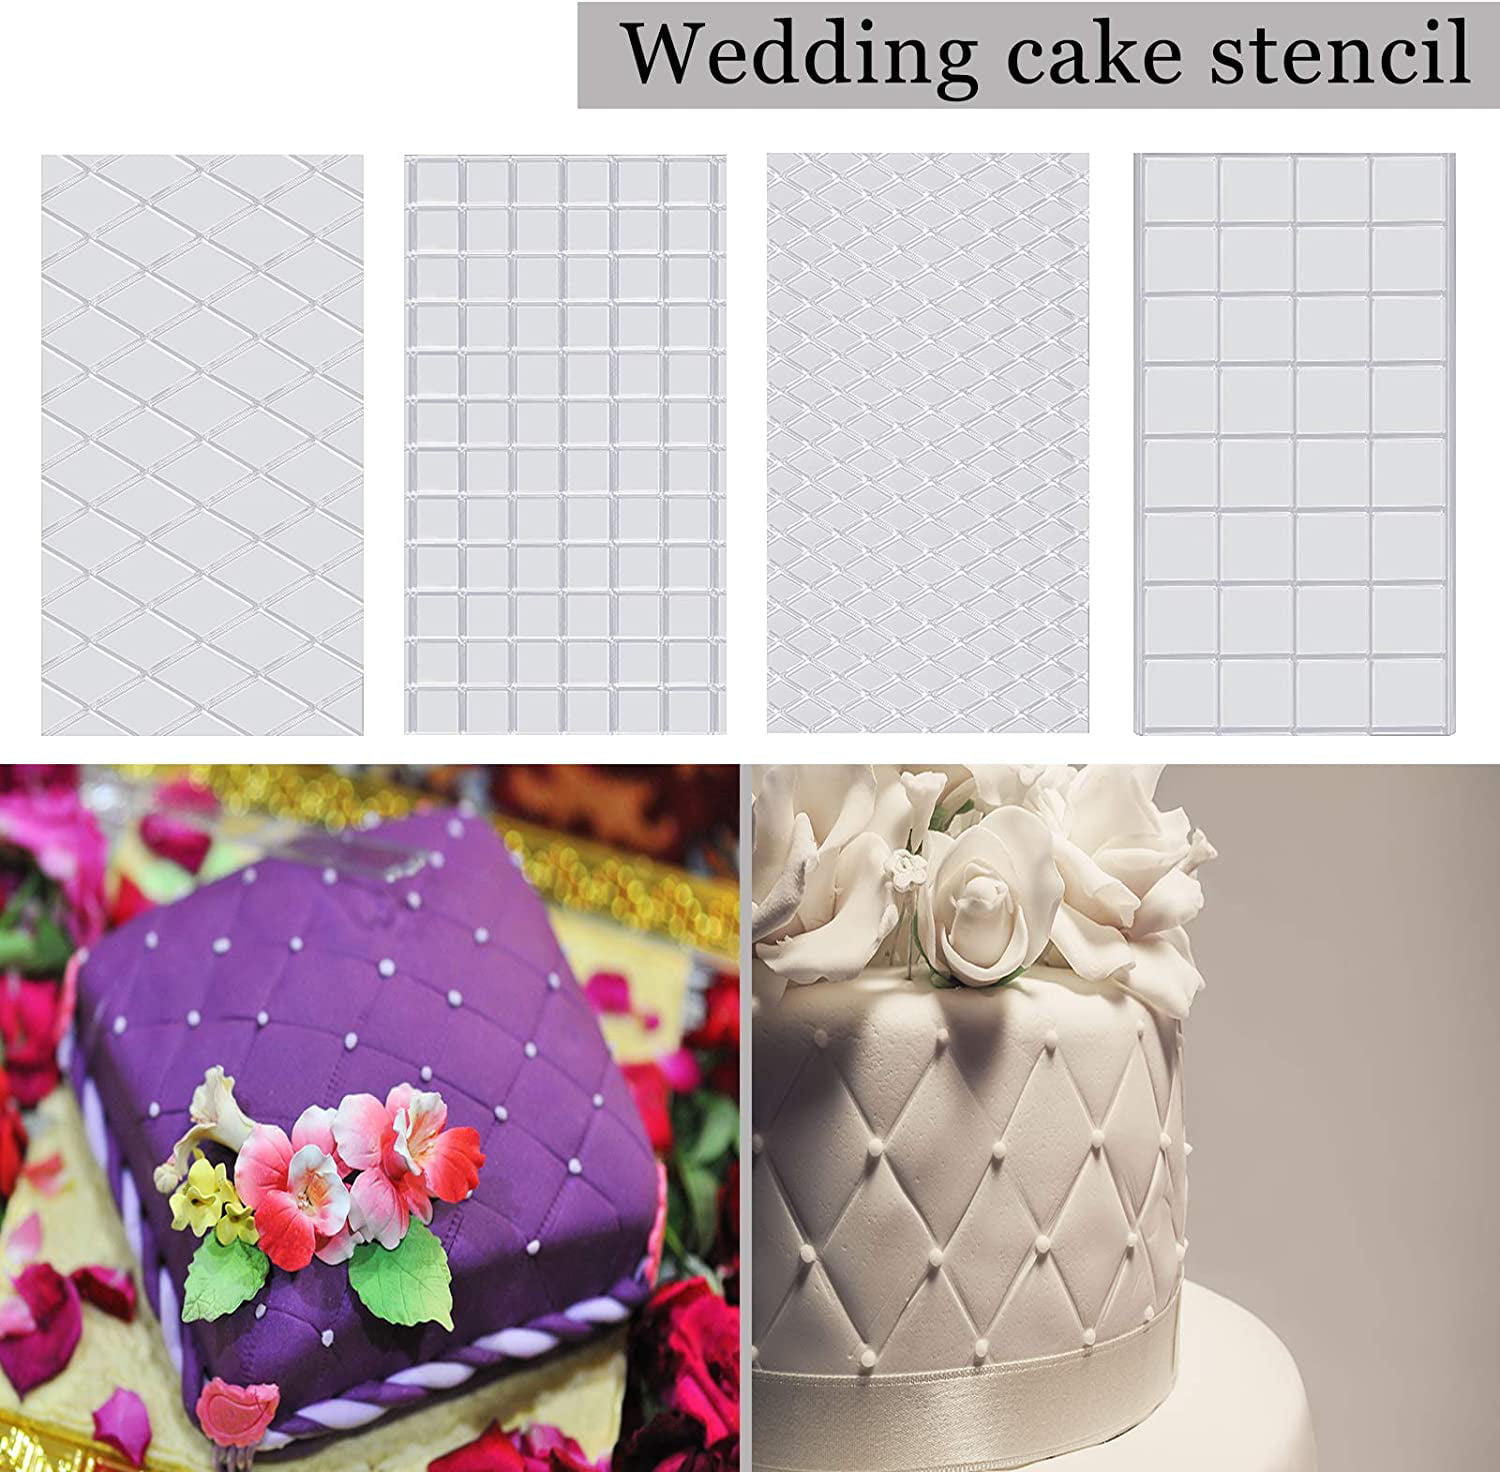 16 Pieces Cake Decoration Stencils Cake Decoration Templates Wedding Cake Decorative Flower Edge Molding Baking Tool for Cupcake Wedding Cake Decoration Supplies 